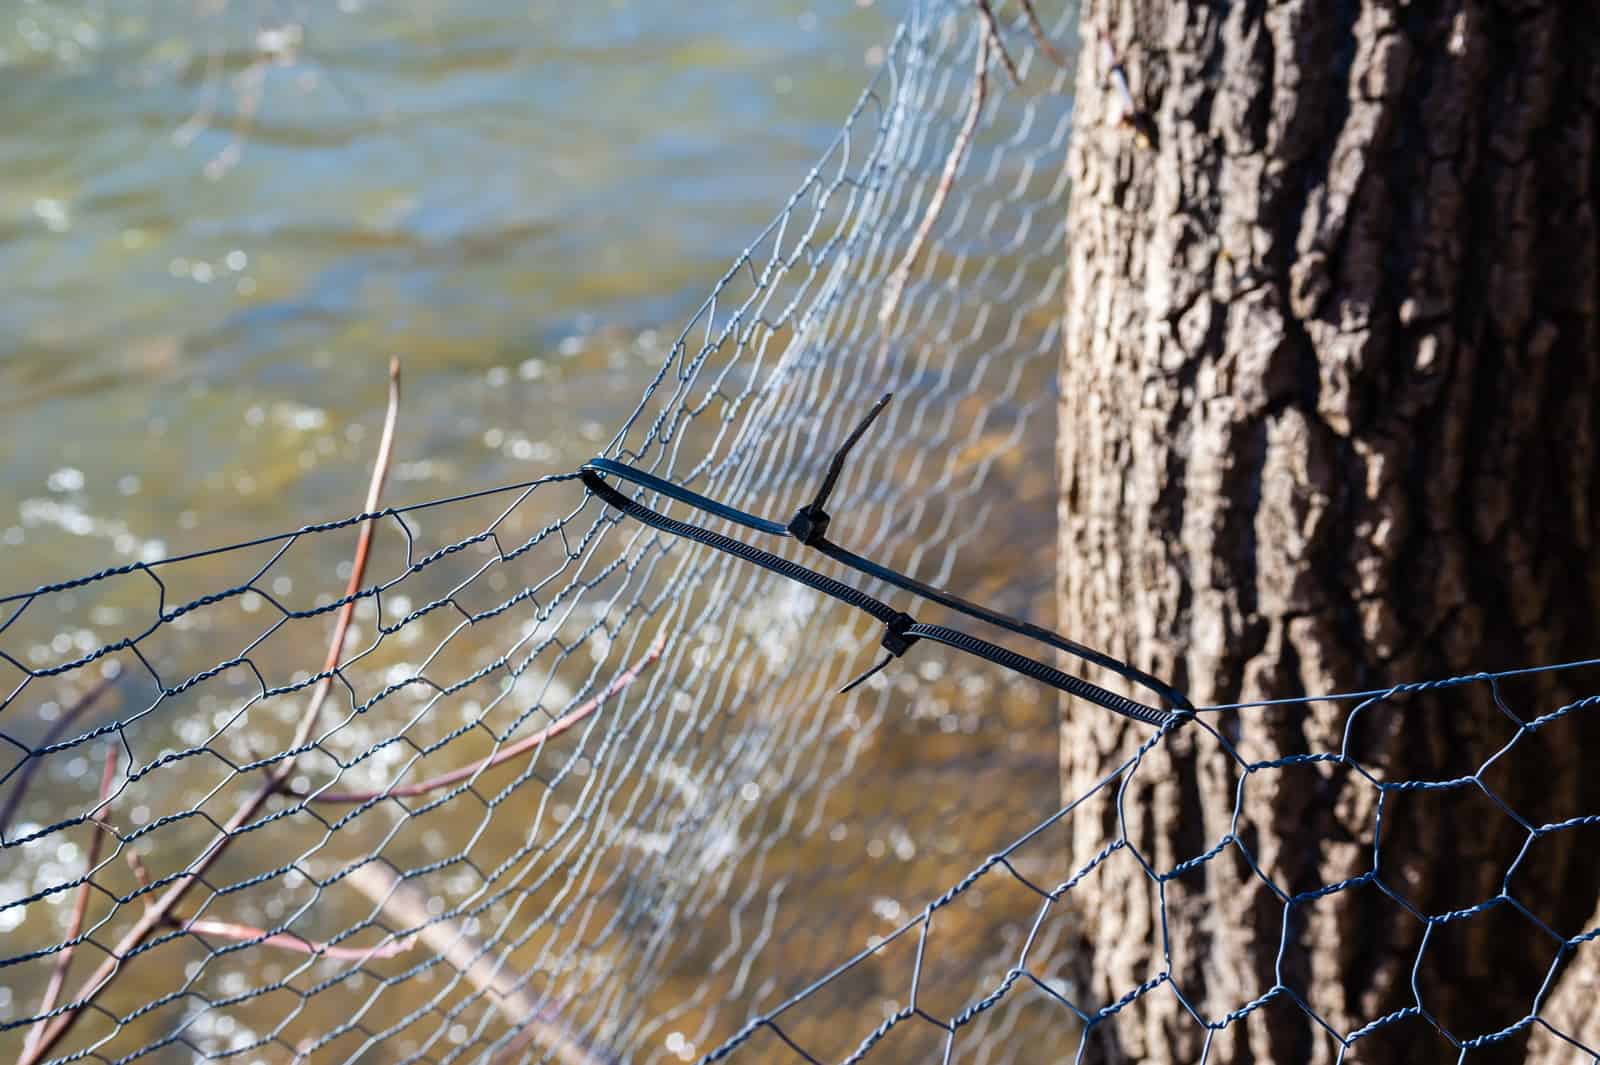 A zip tie locked in both bird nets to secure sagging